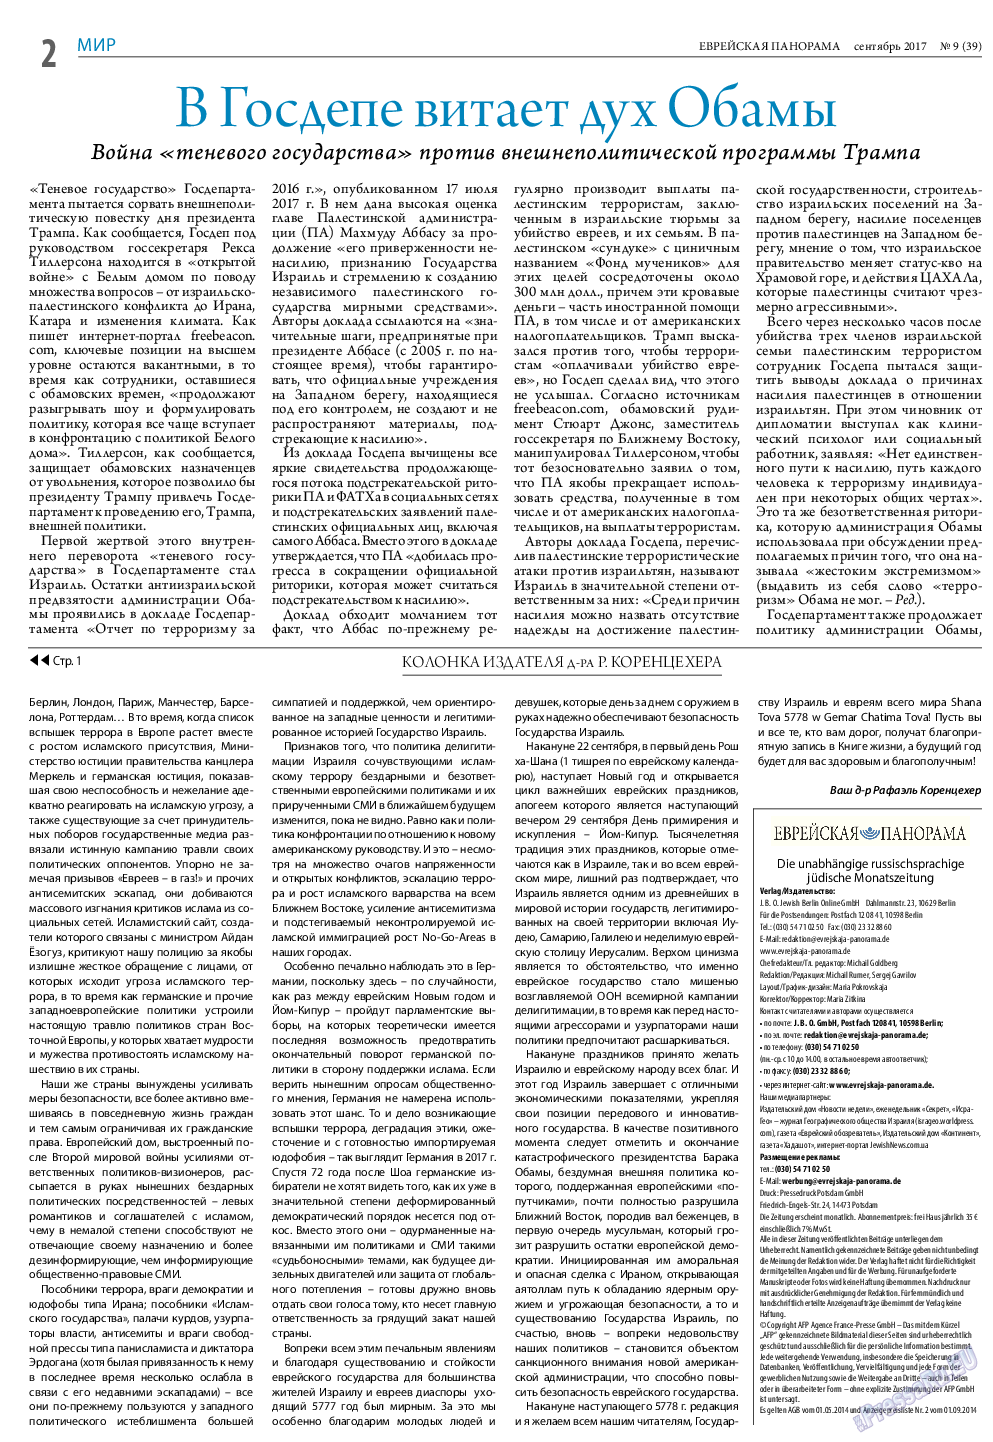 Еврейская панорама, газета. 2017 №9 стр.2